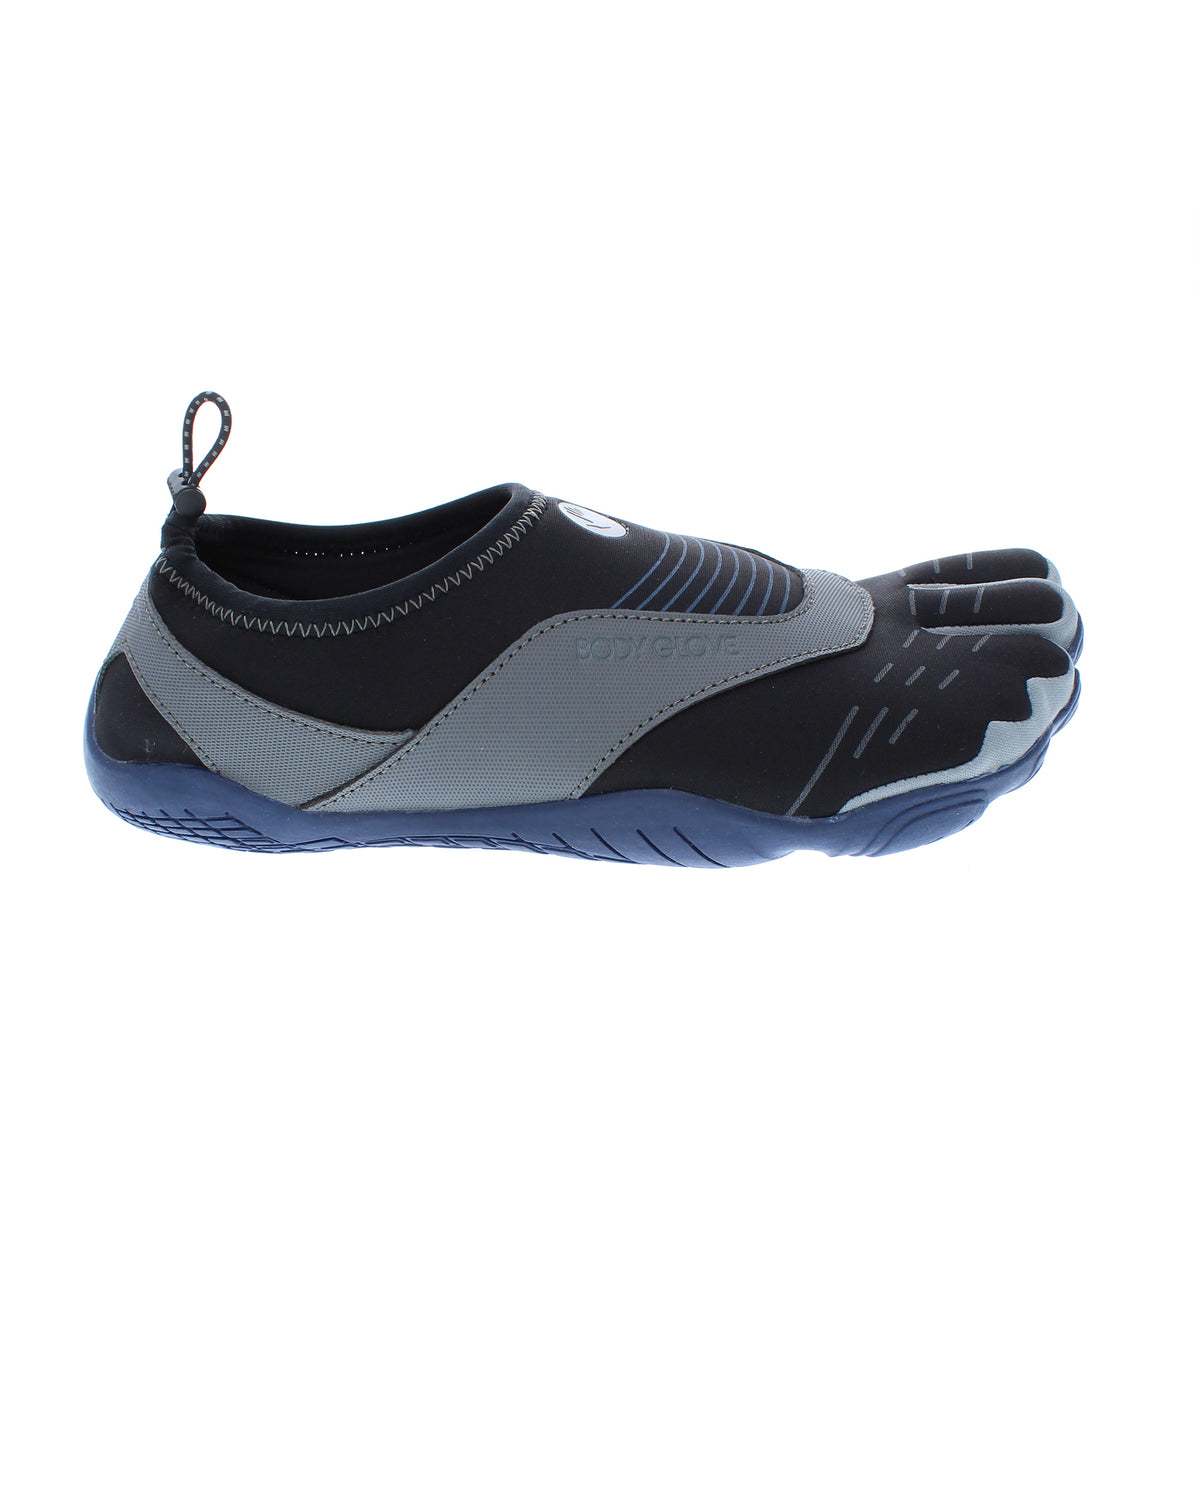 Men's 3T Barefoot Cinch Water Shoes - Black/Indigo - Body Glove